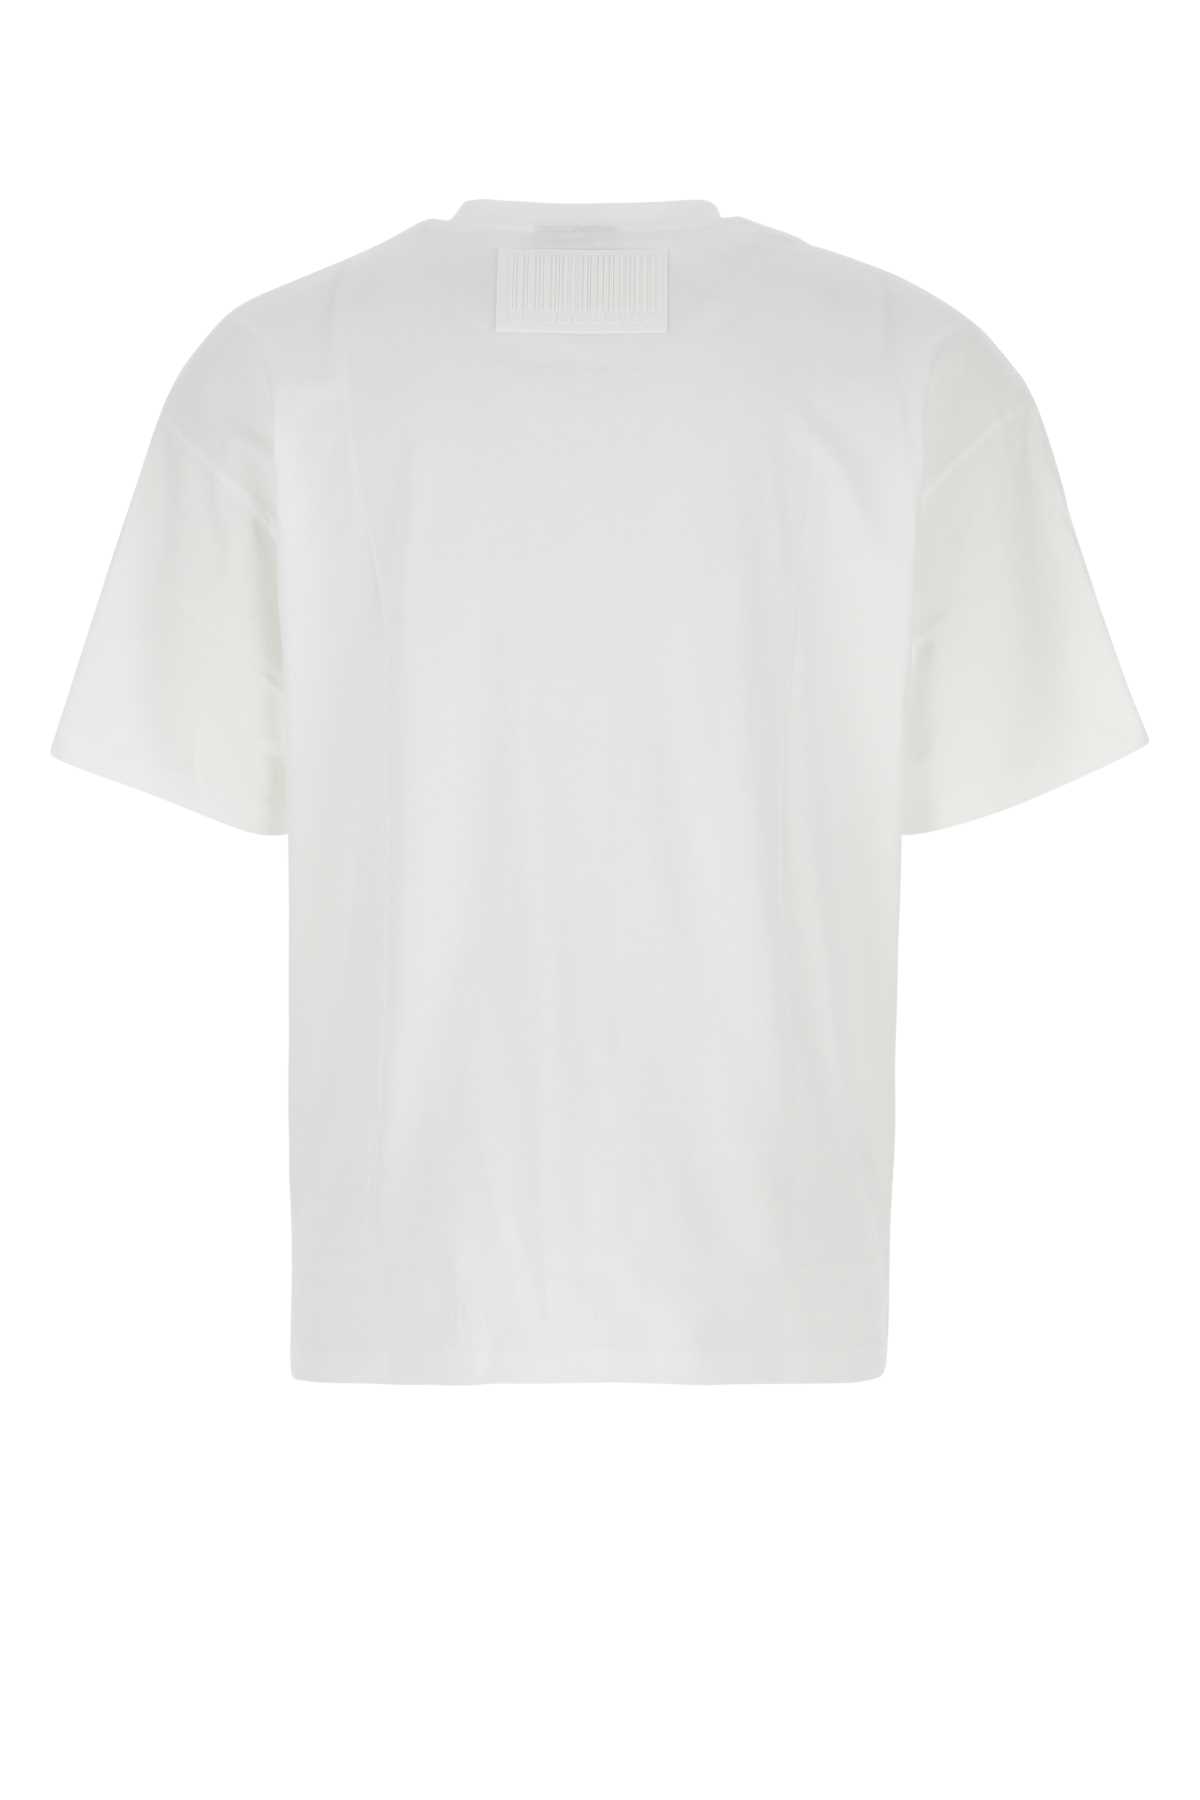 Shop Vtmnts White Cotton T-shirt